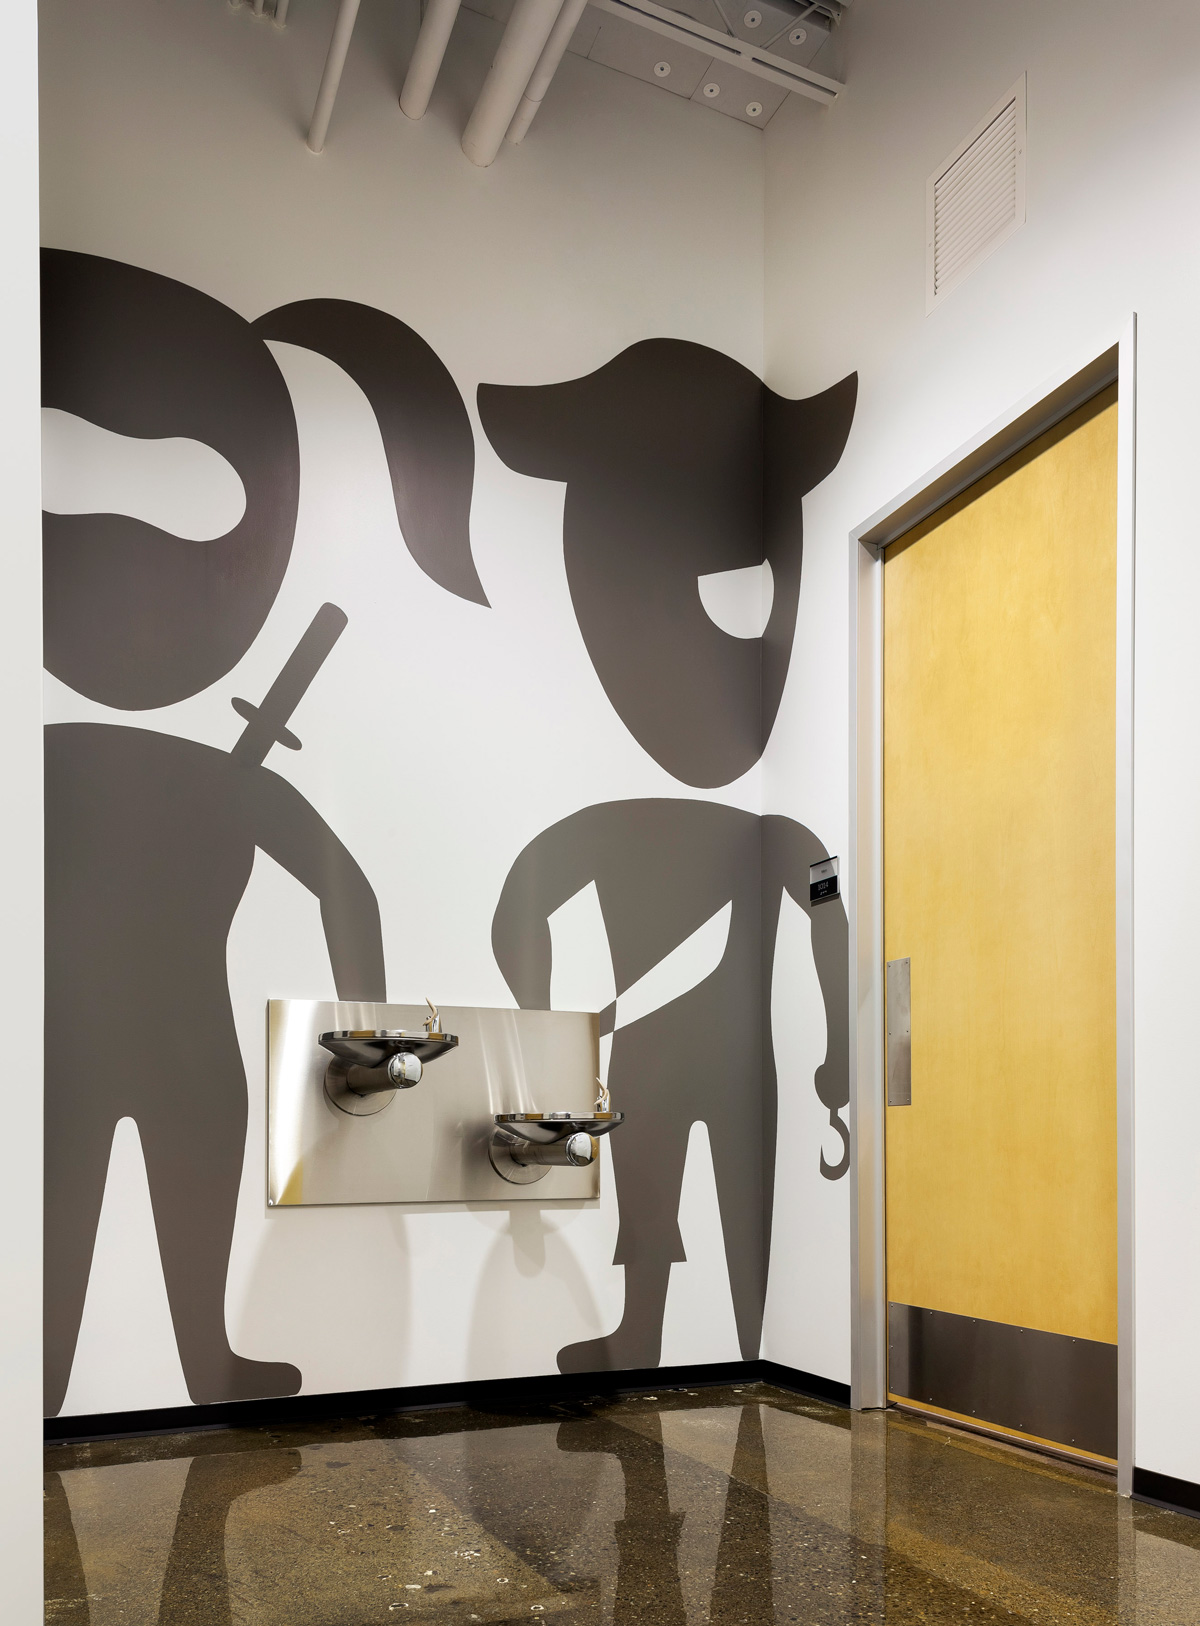 Microsoft B20 Renovation office restroom artwork